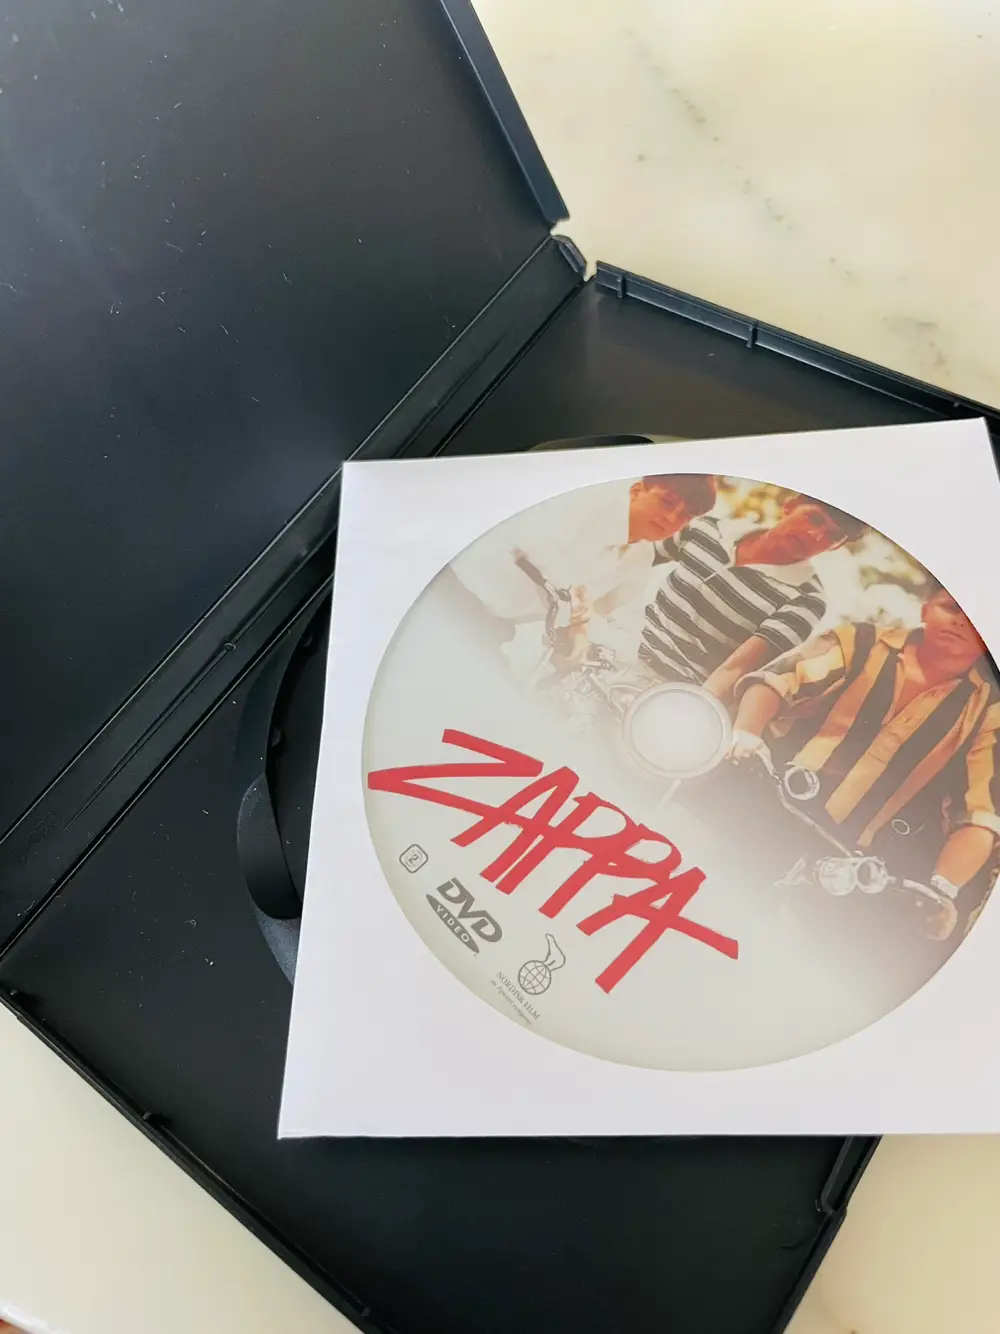 Zappa Dvd film